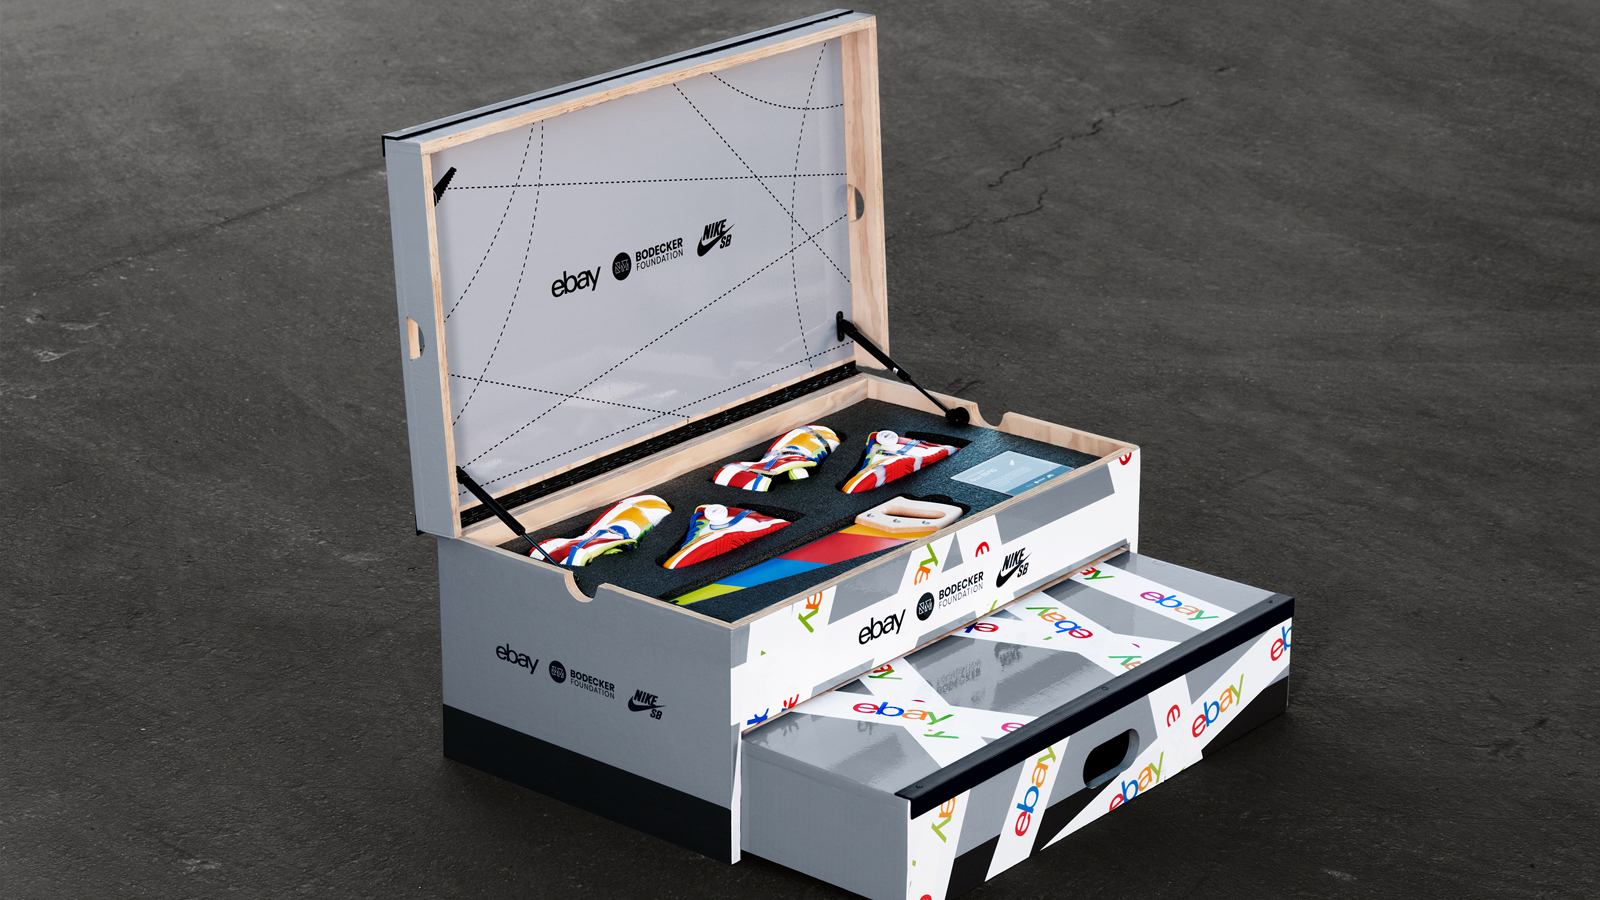 Dejar abajo Diagnosticar Joya eBay and Nike Reissue the Iconic 'eBay Dunk'